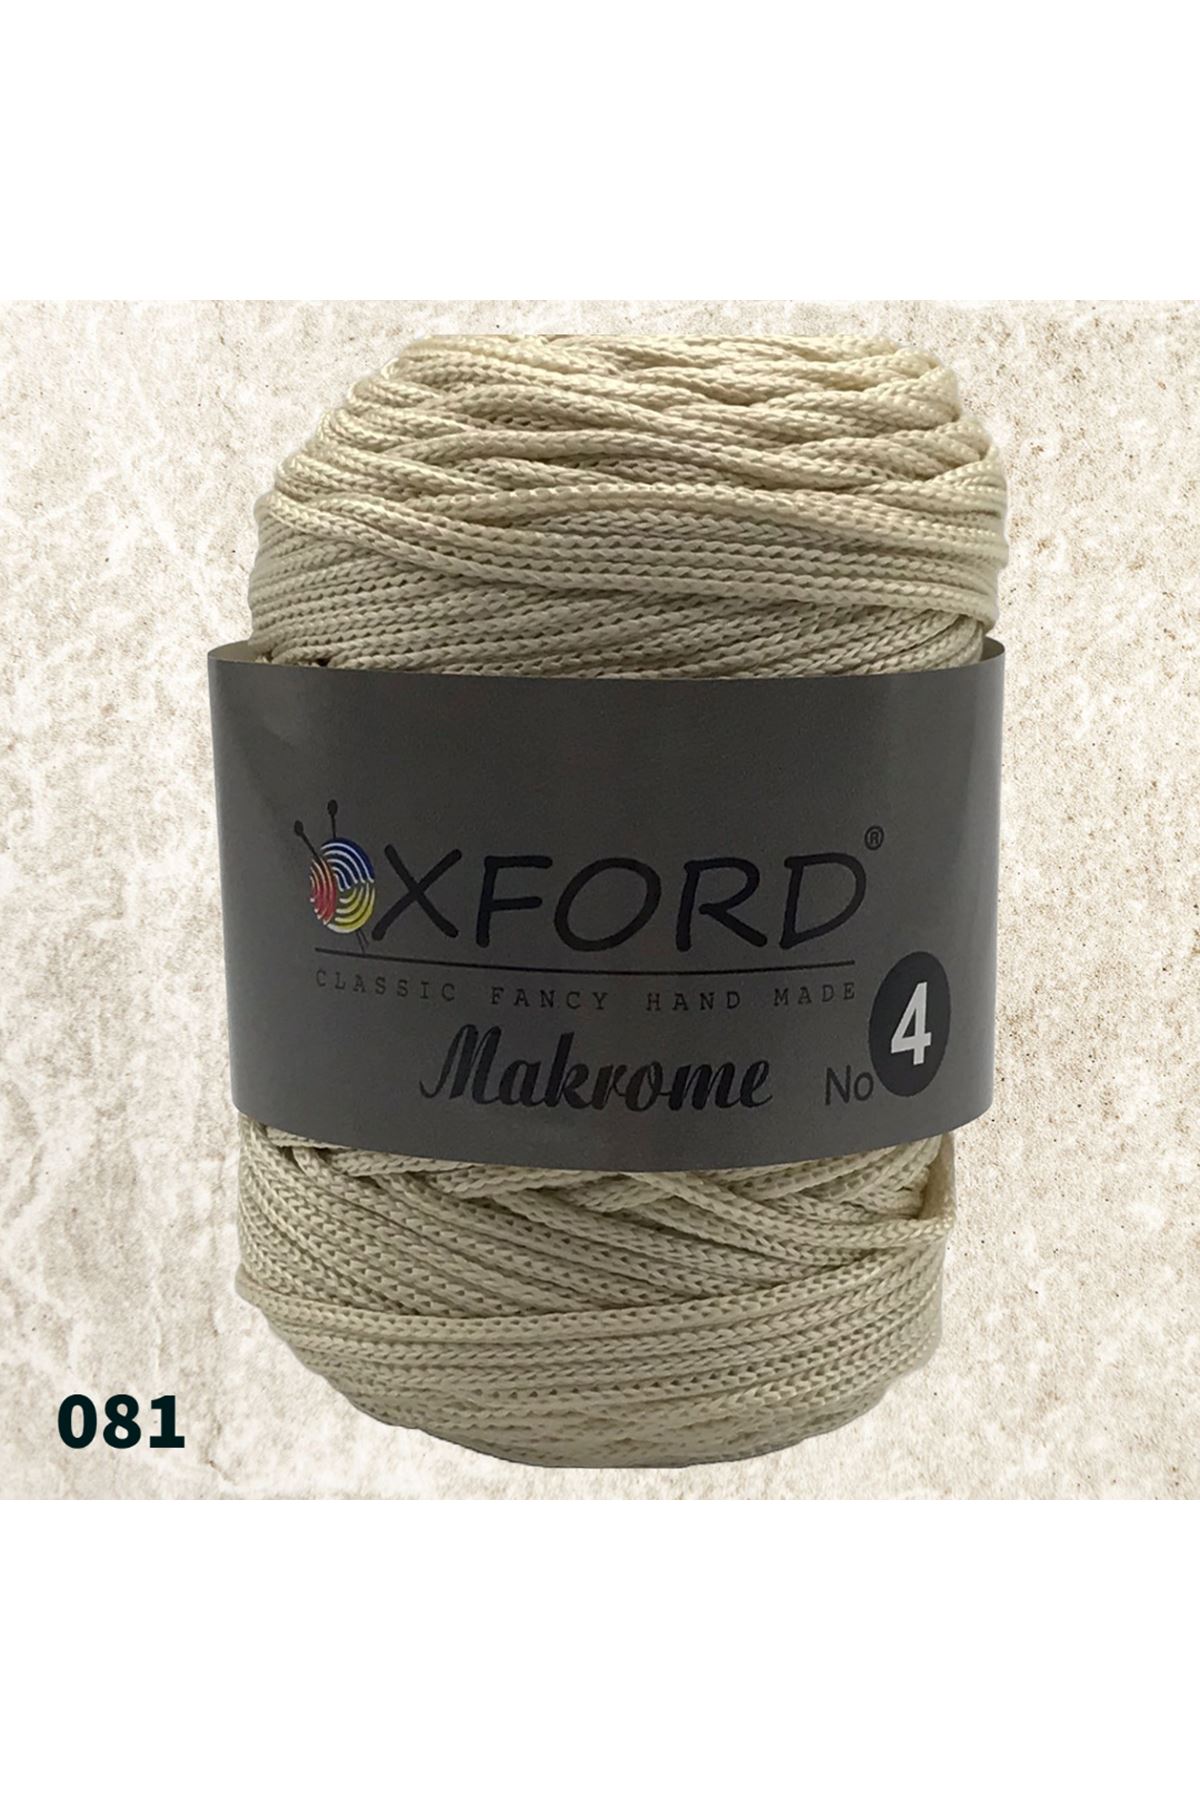 Oxford 4 No Makrome - 81 Koyu Krem